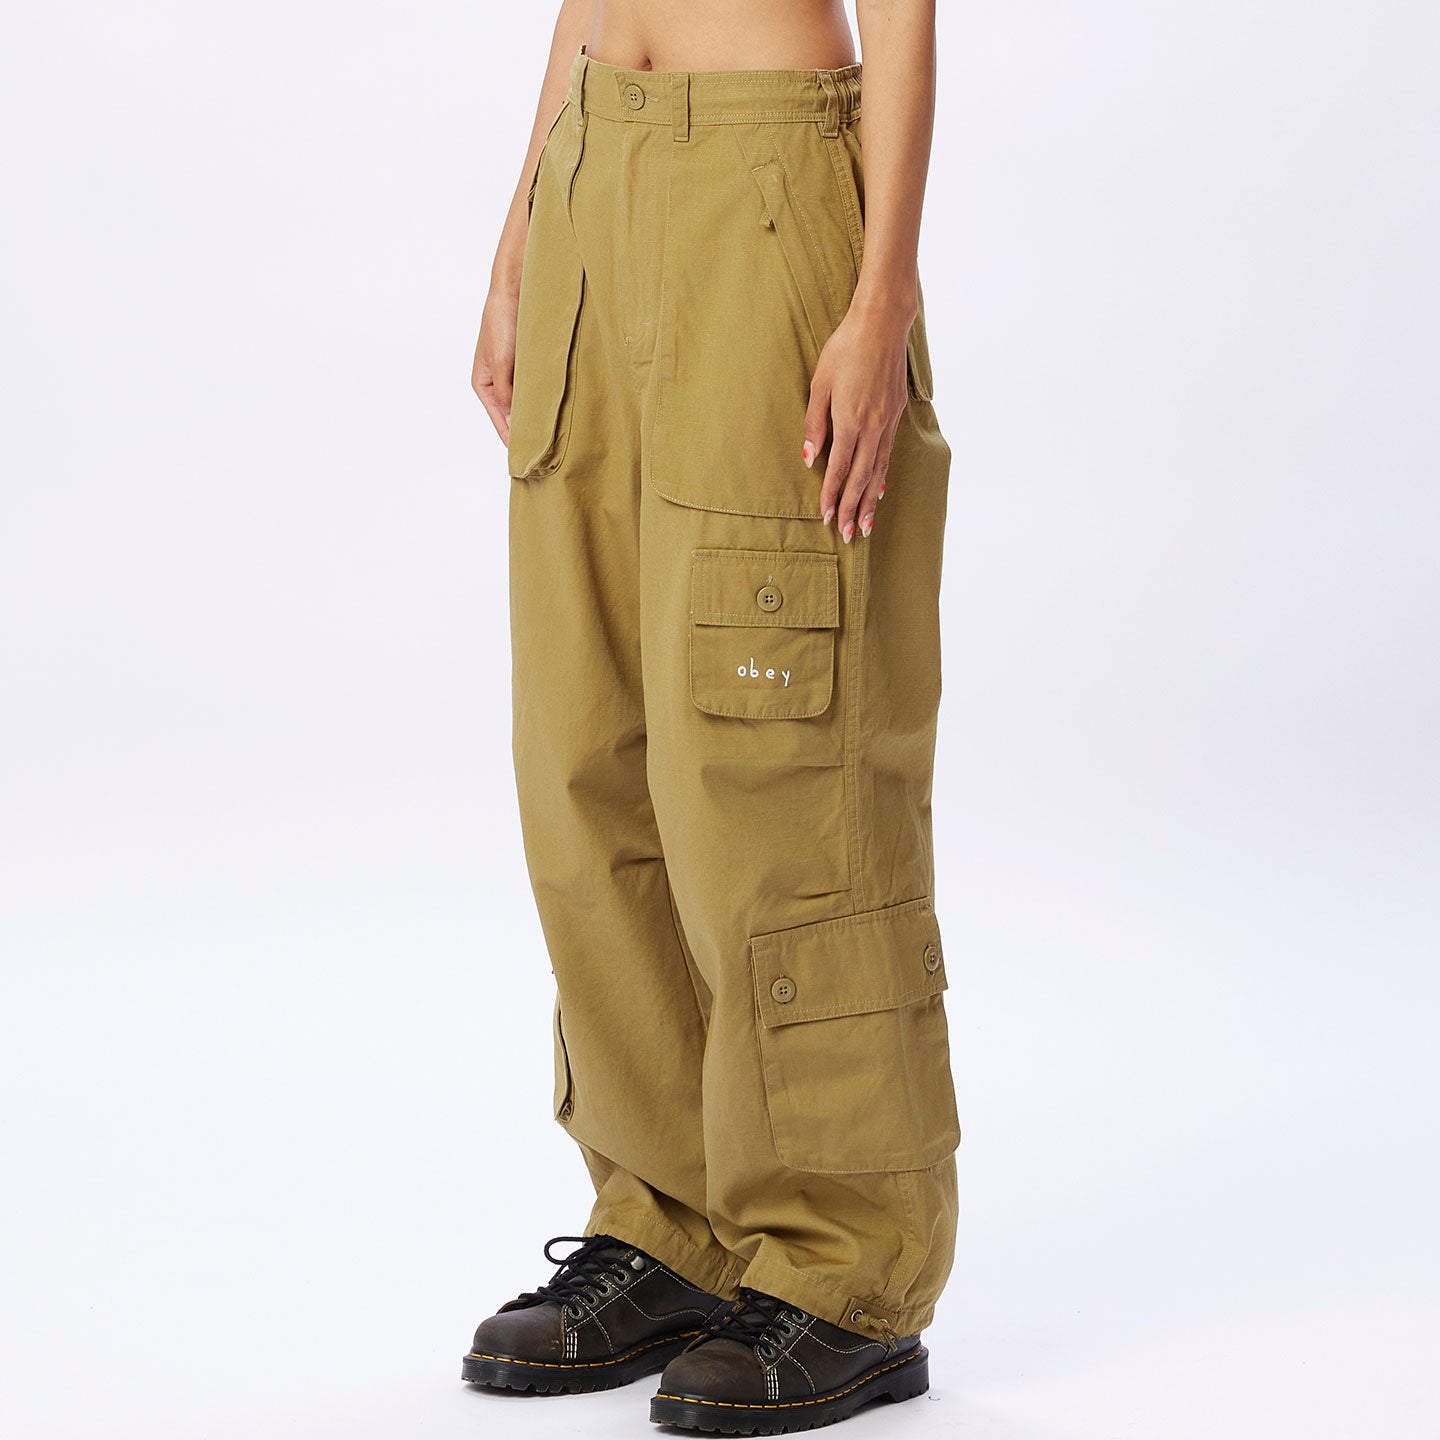 Obey Clothing BIG DIVISION PANT - Cargo trousers - sepia/brown - Zalando.de